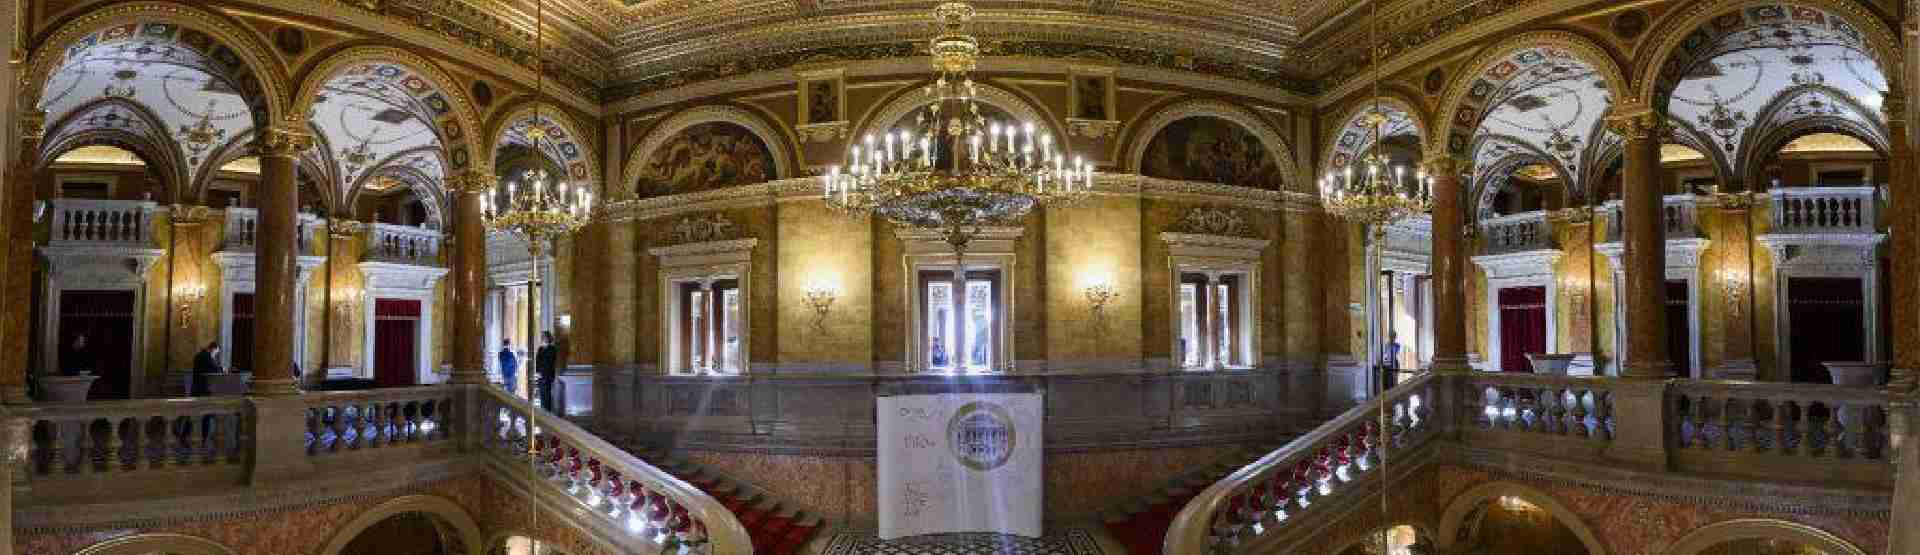 Obnovljena zgrada budimpeštanske Opere ponovno je otvorena 12. ožujka 2022. svečanim gala koncertom